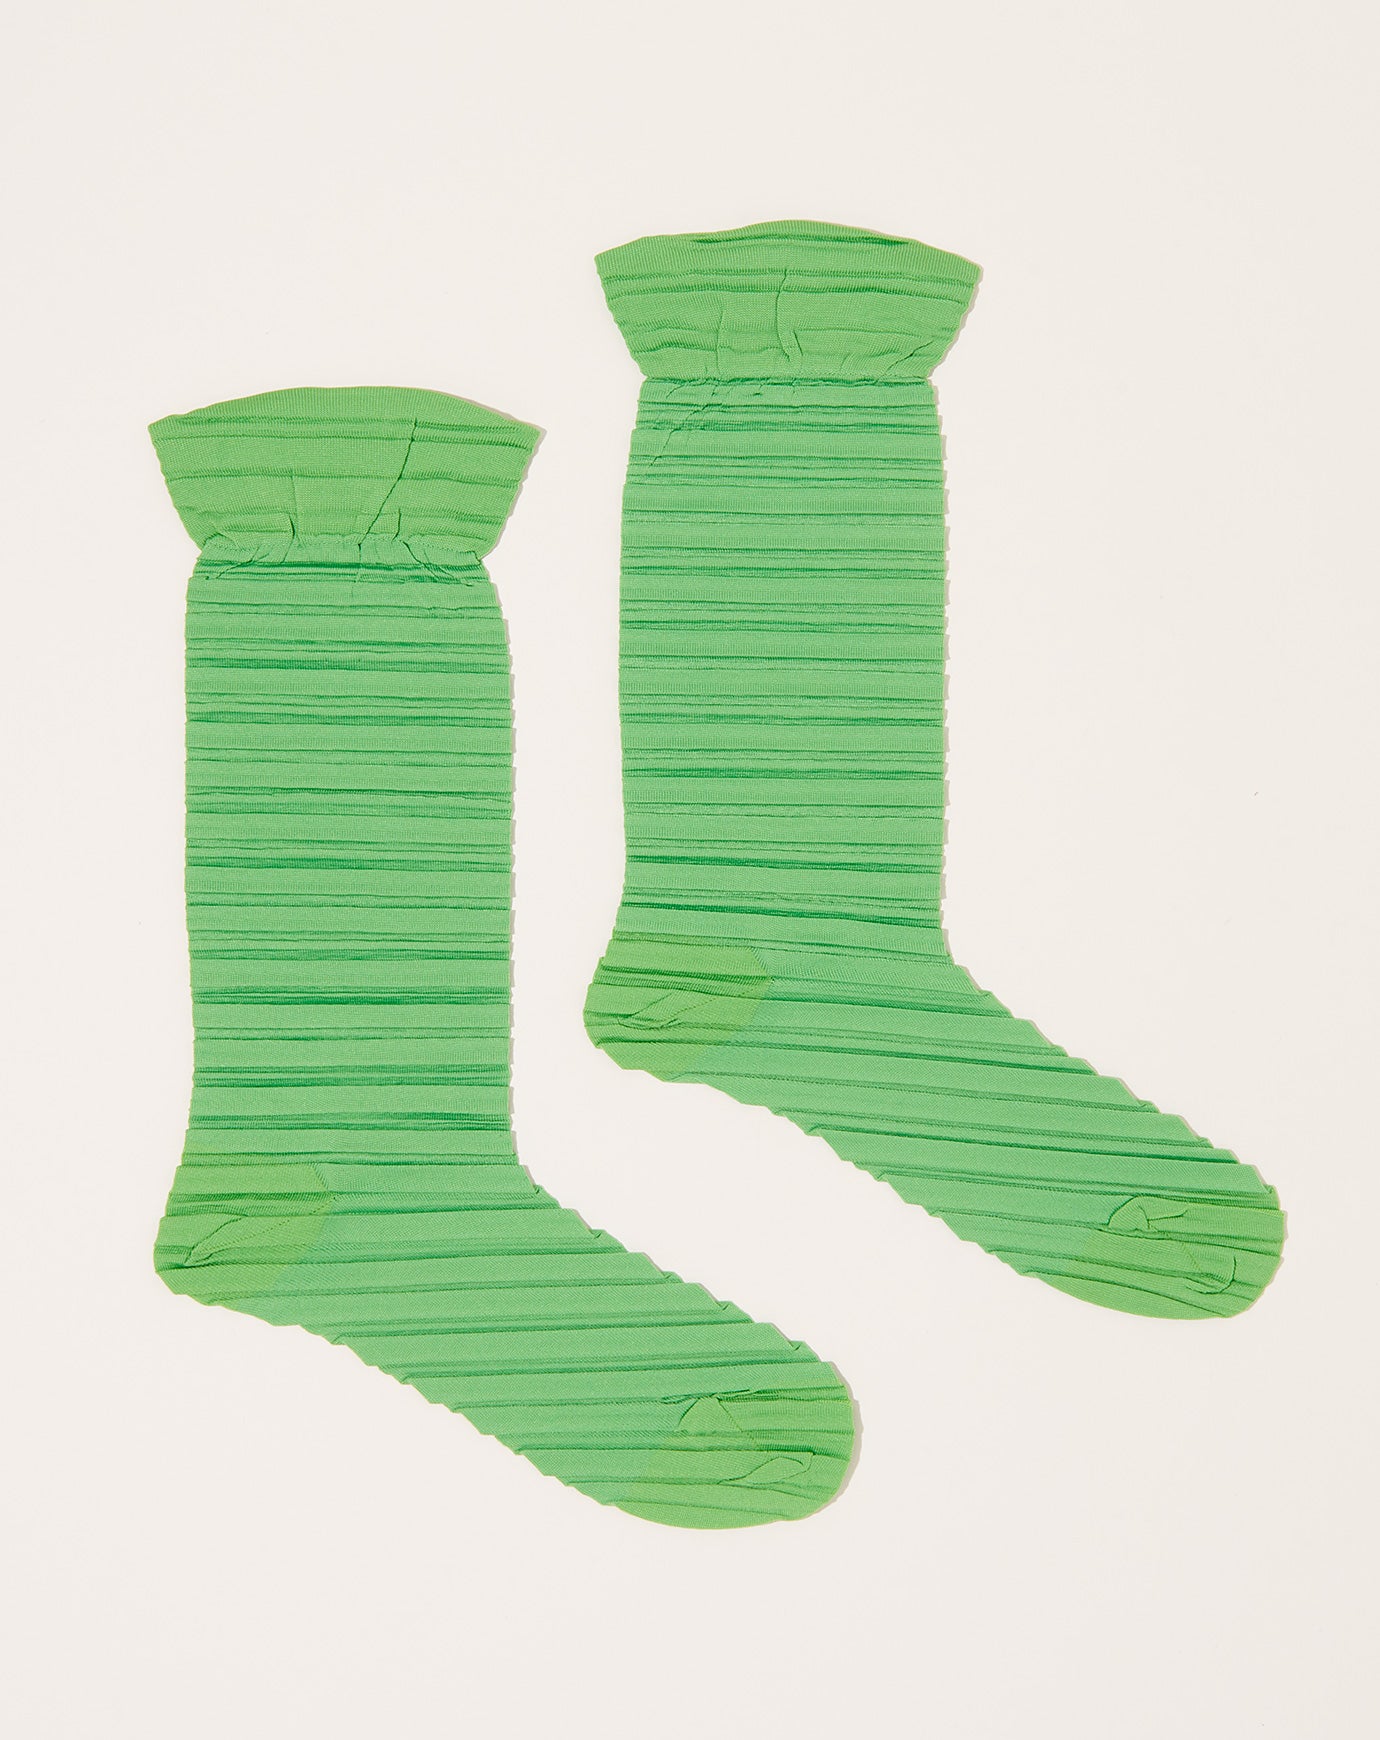 Babaco Crushed Socks in Lime Green